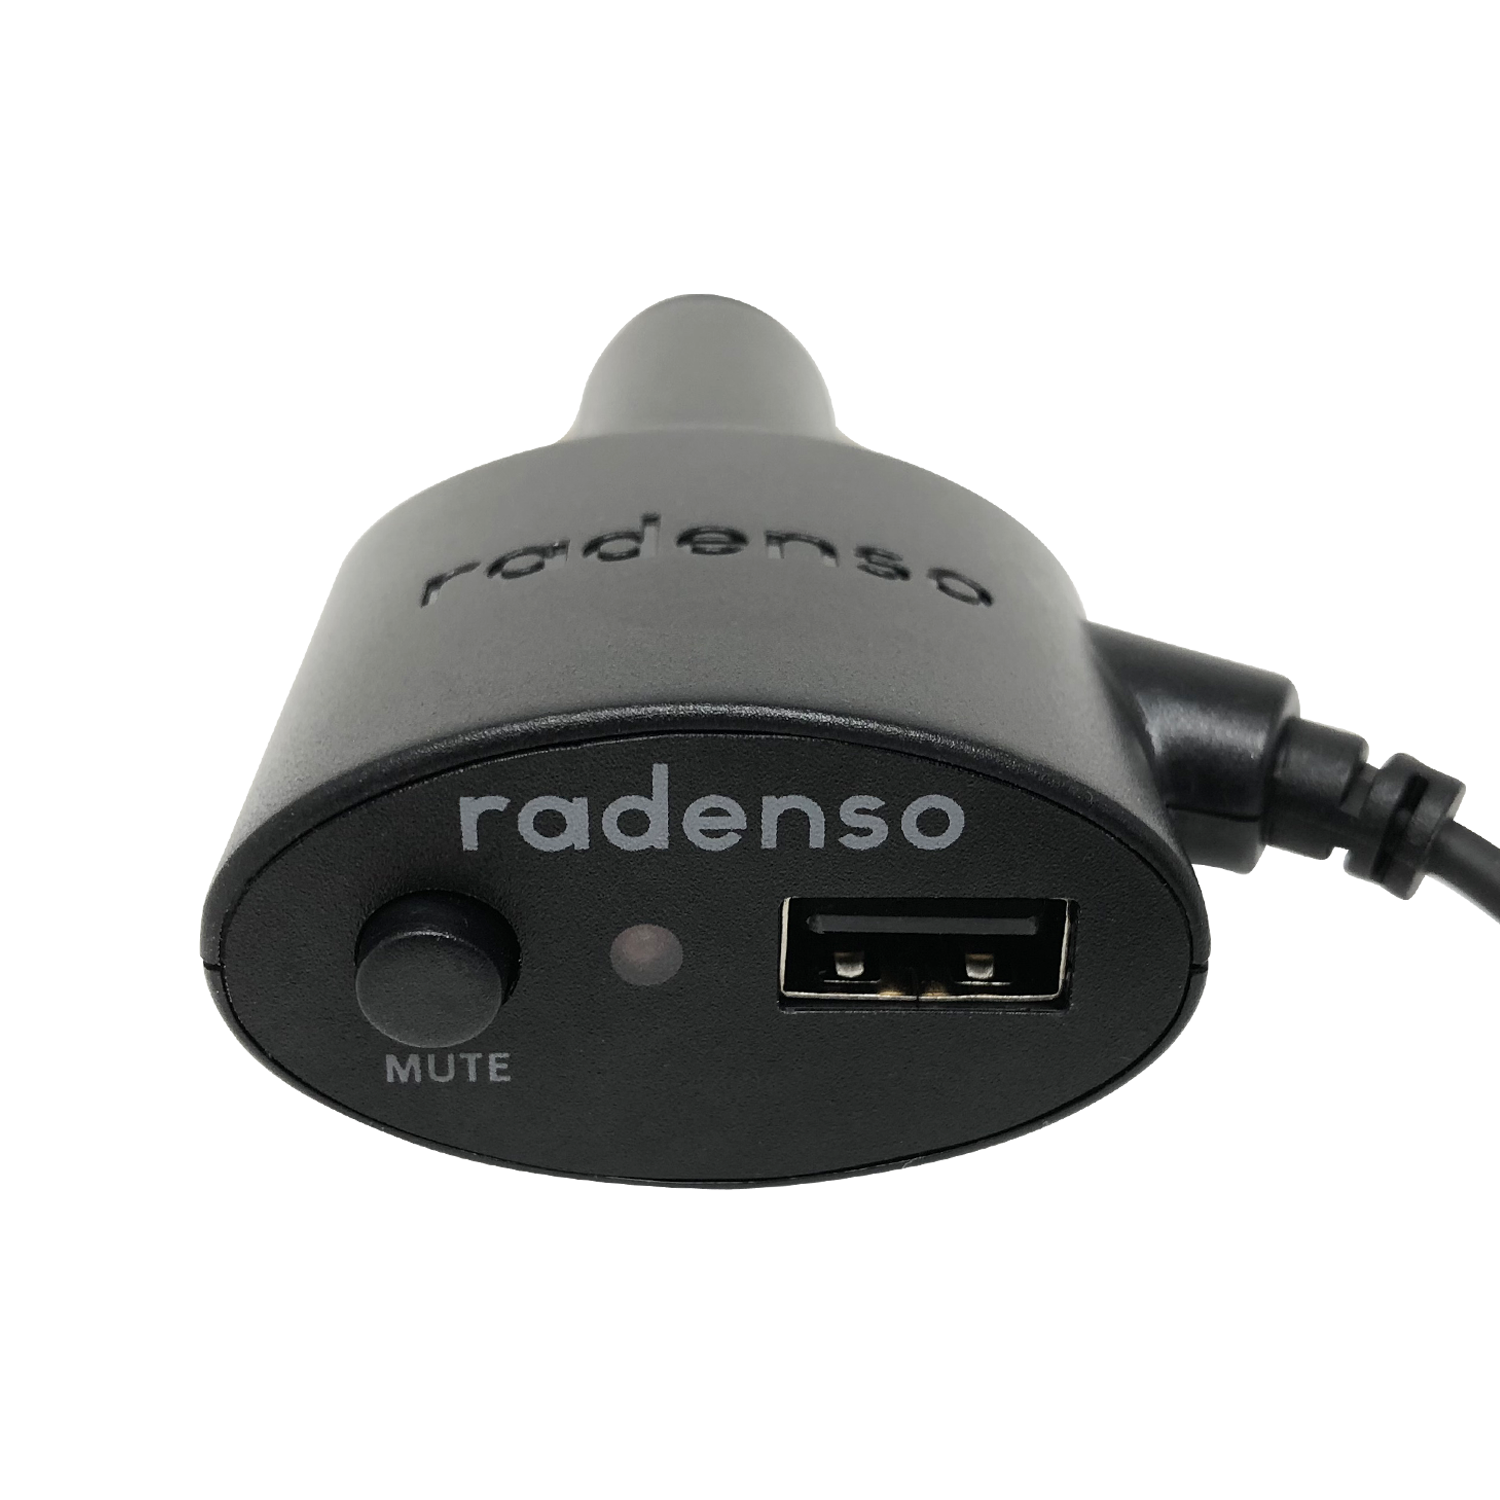 Radenso XP/SP Mute Power Adapter